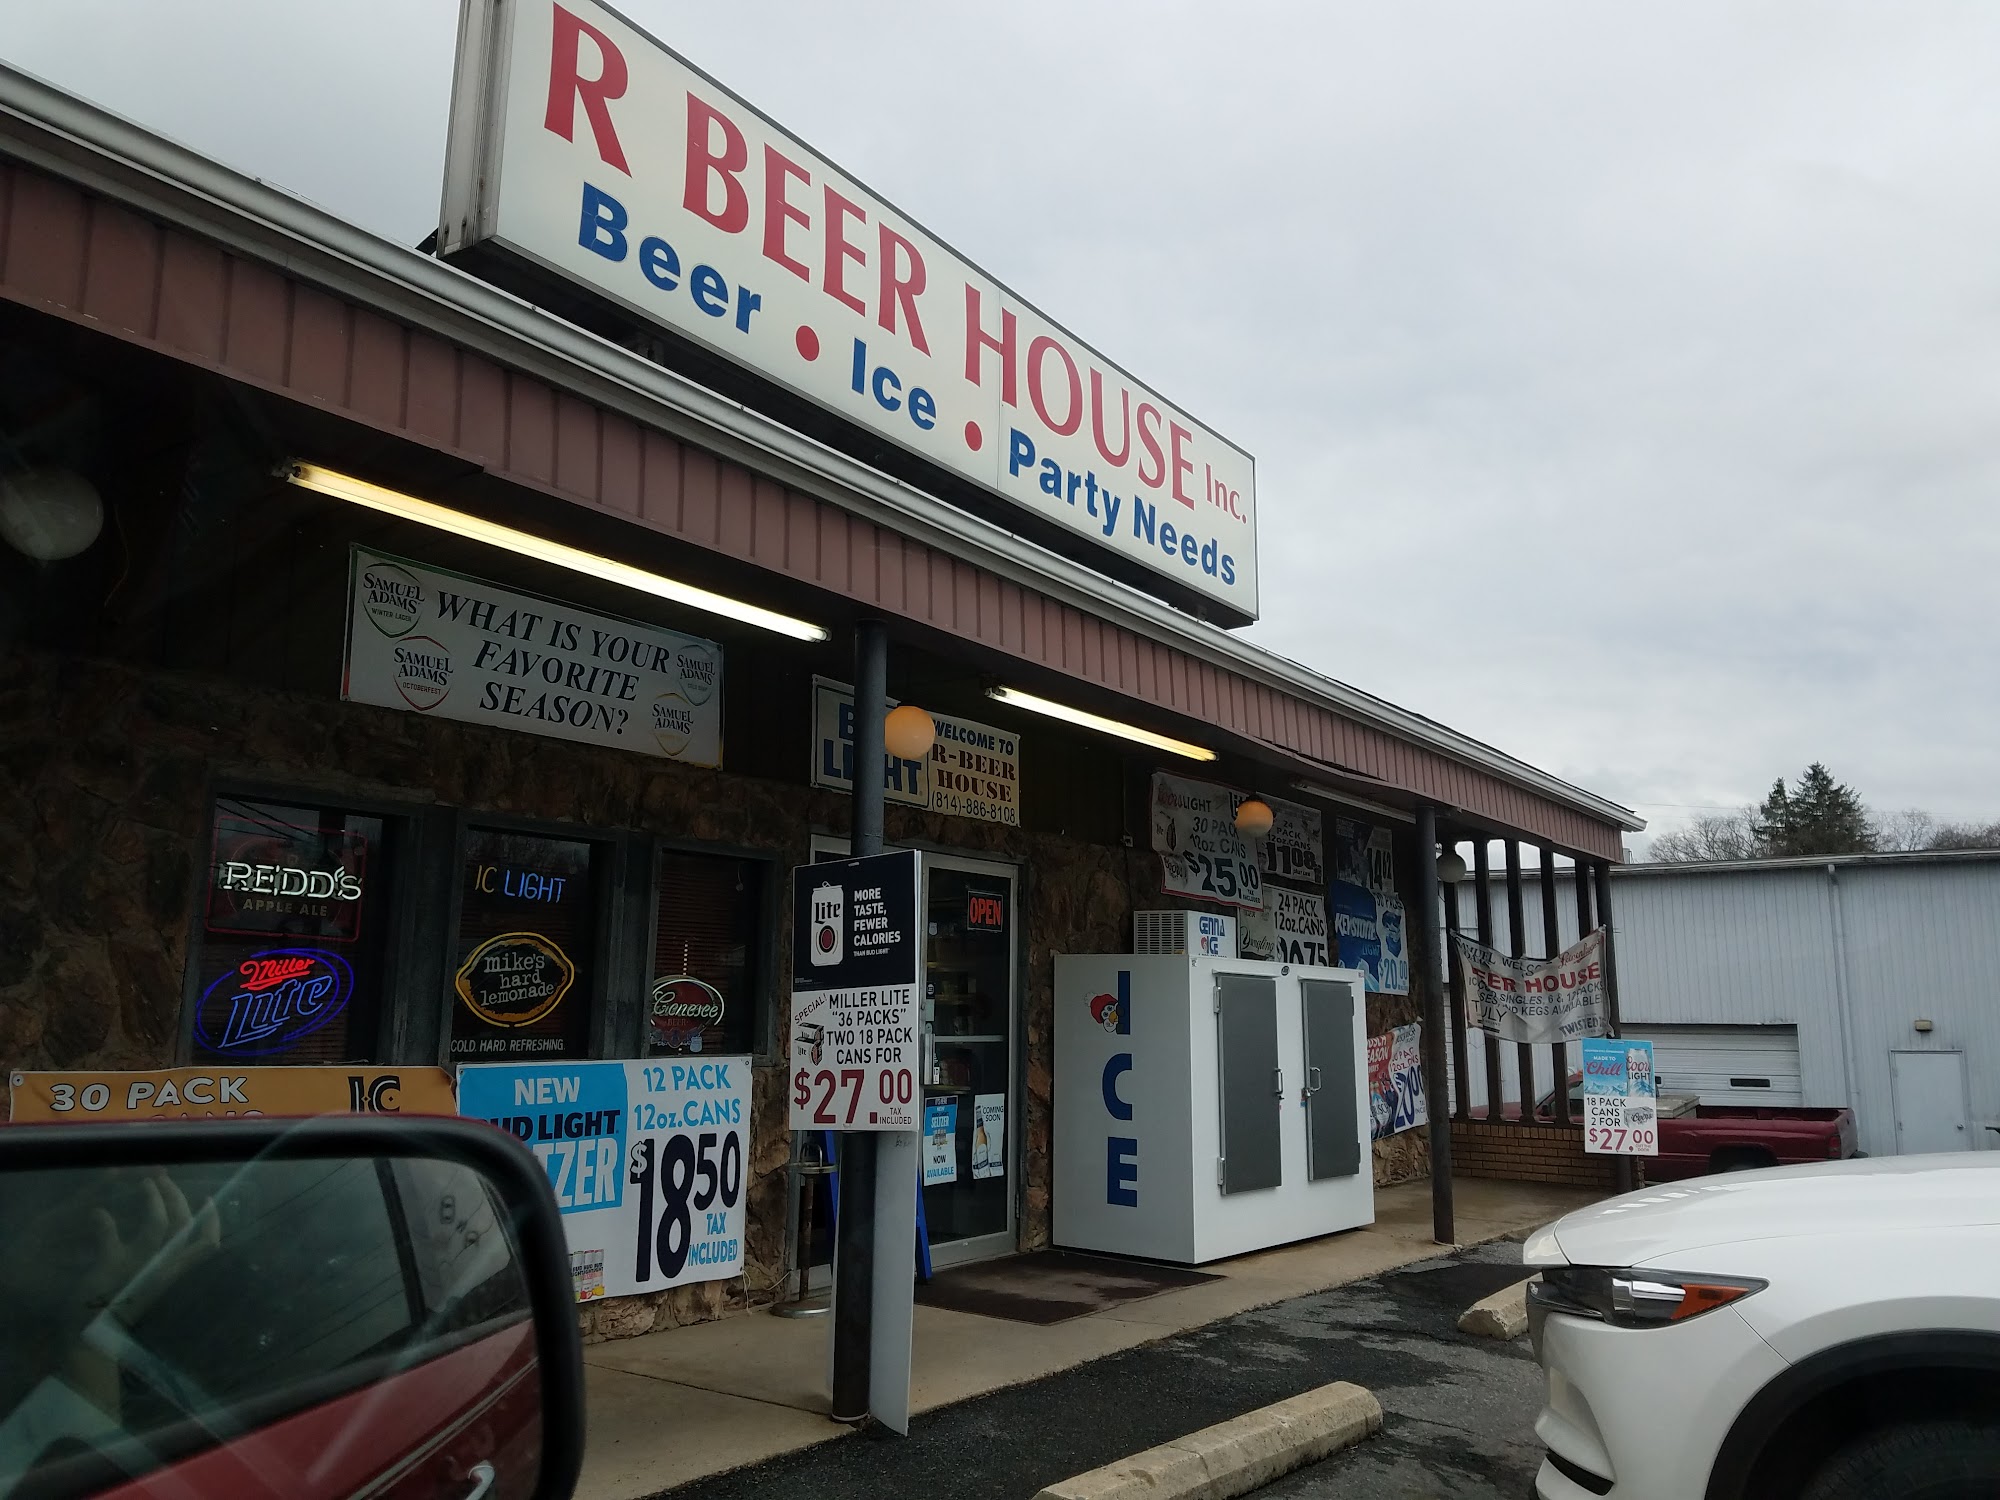 R Beer House